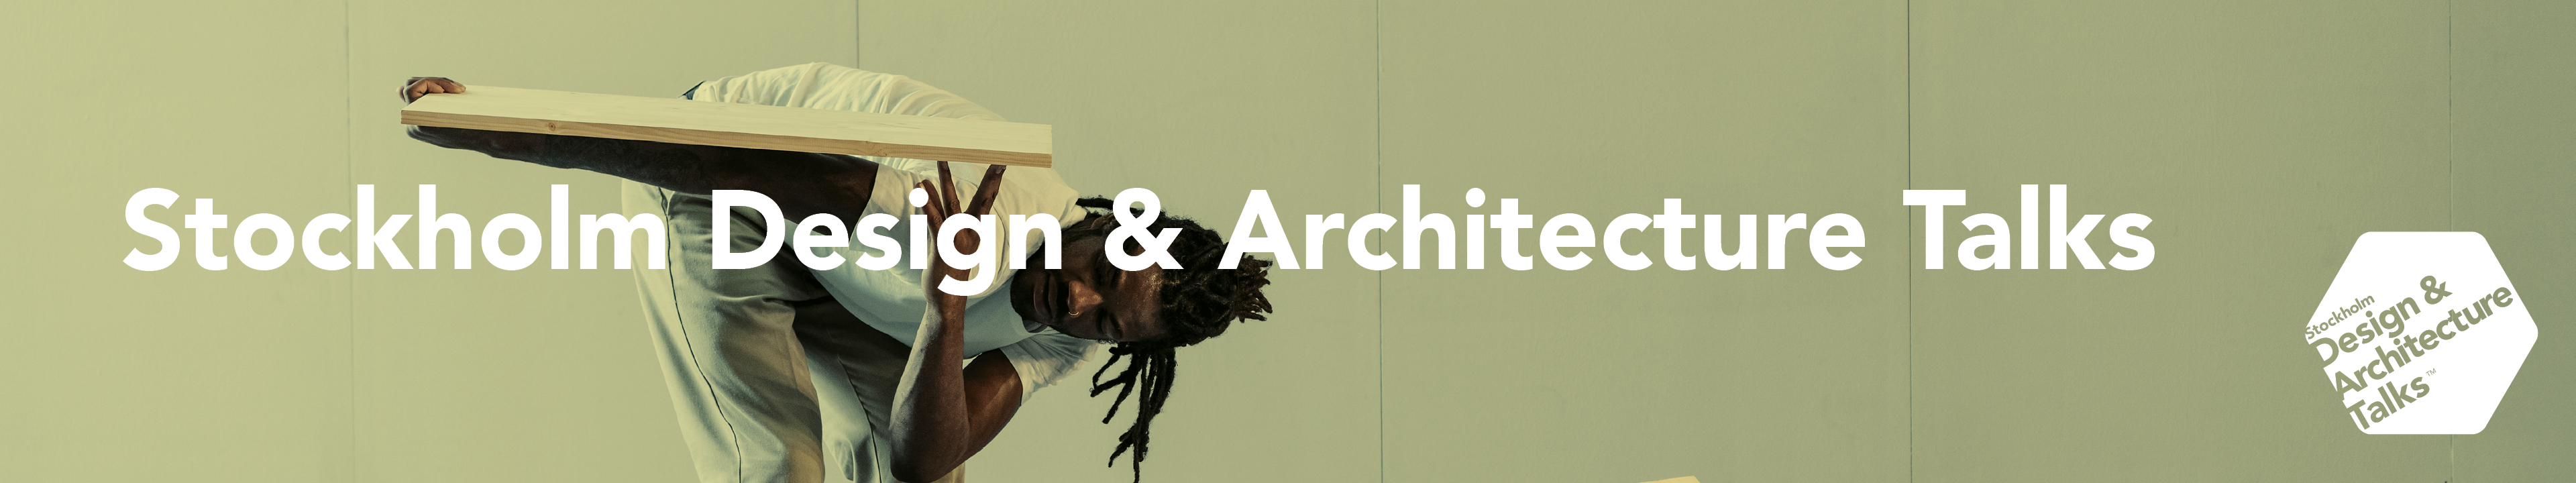 Header image for Stockholm Design and Architecture Talks 